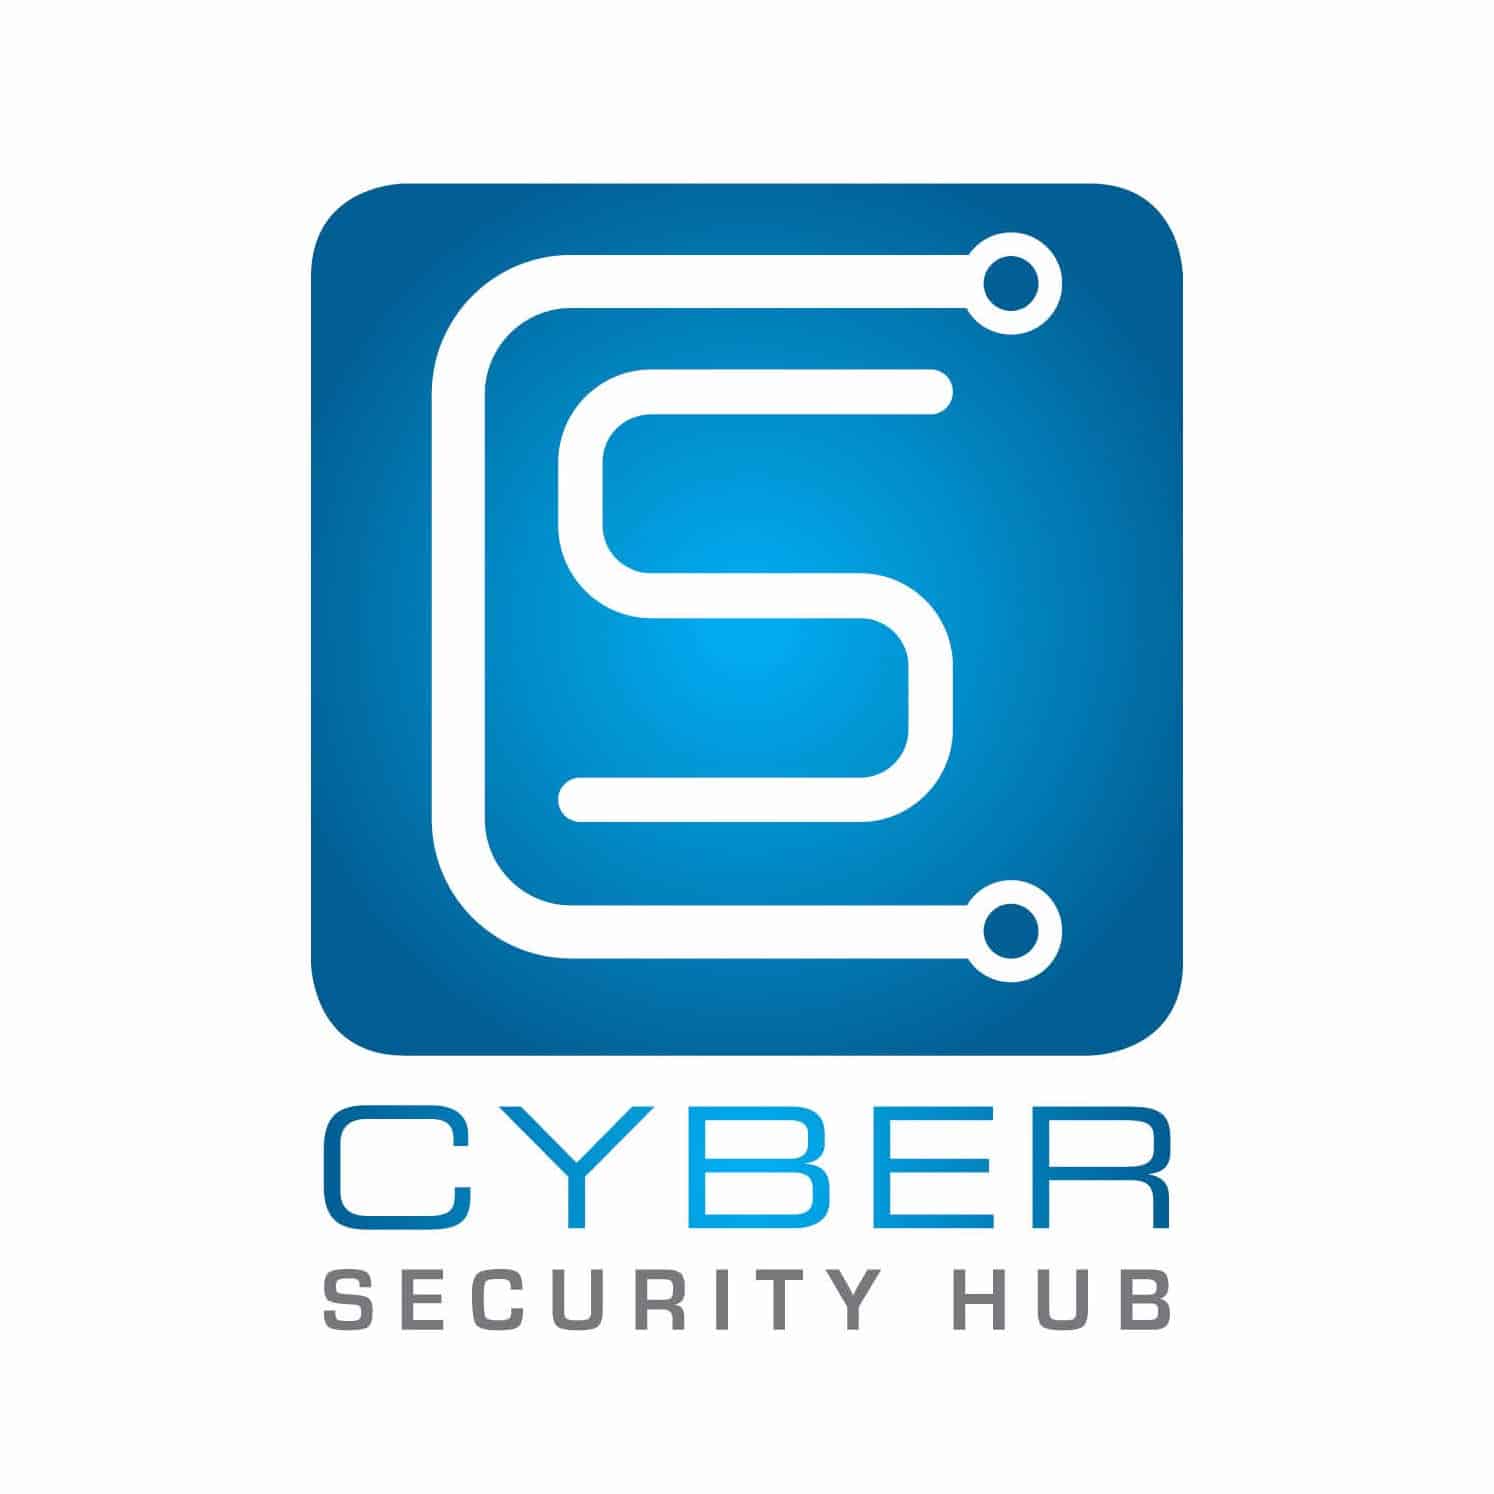 CyberSecurity HUB